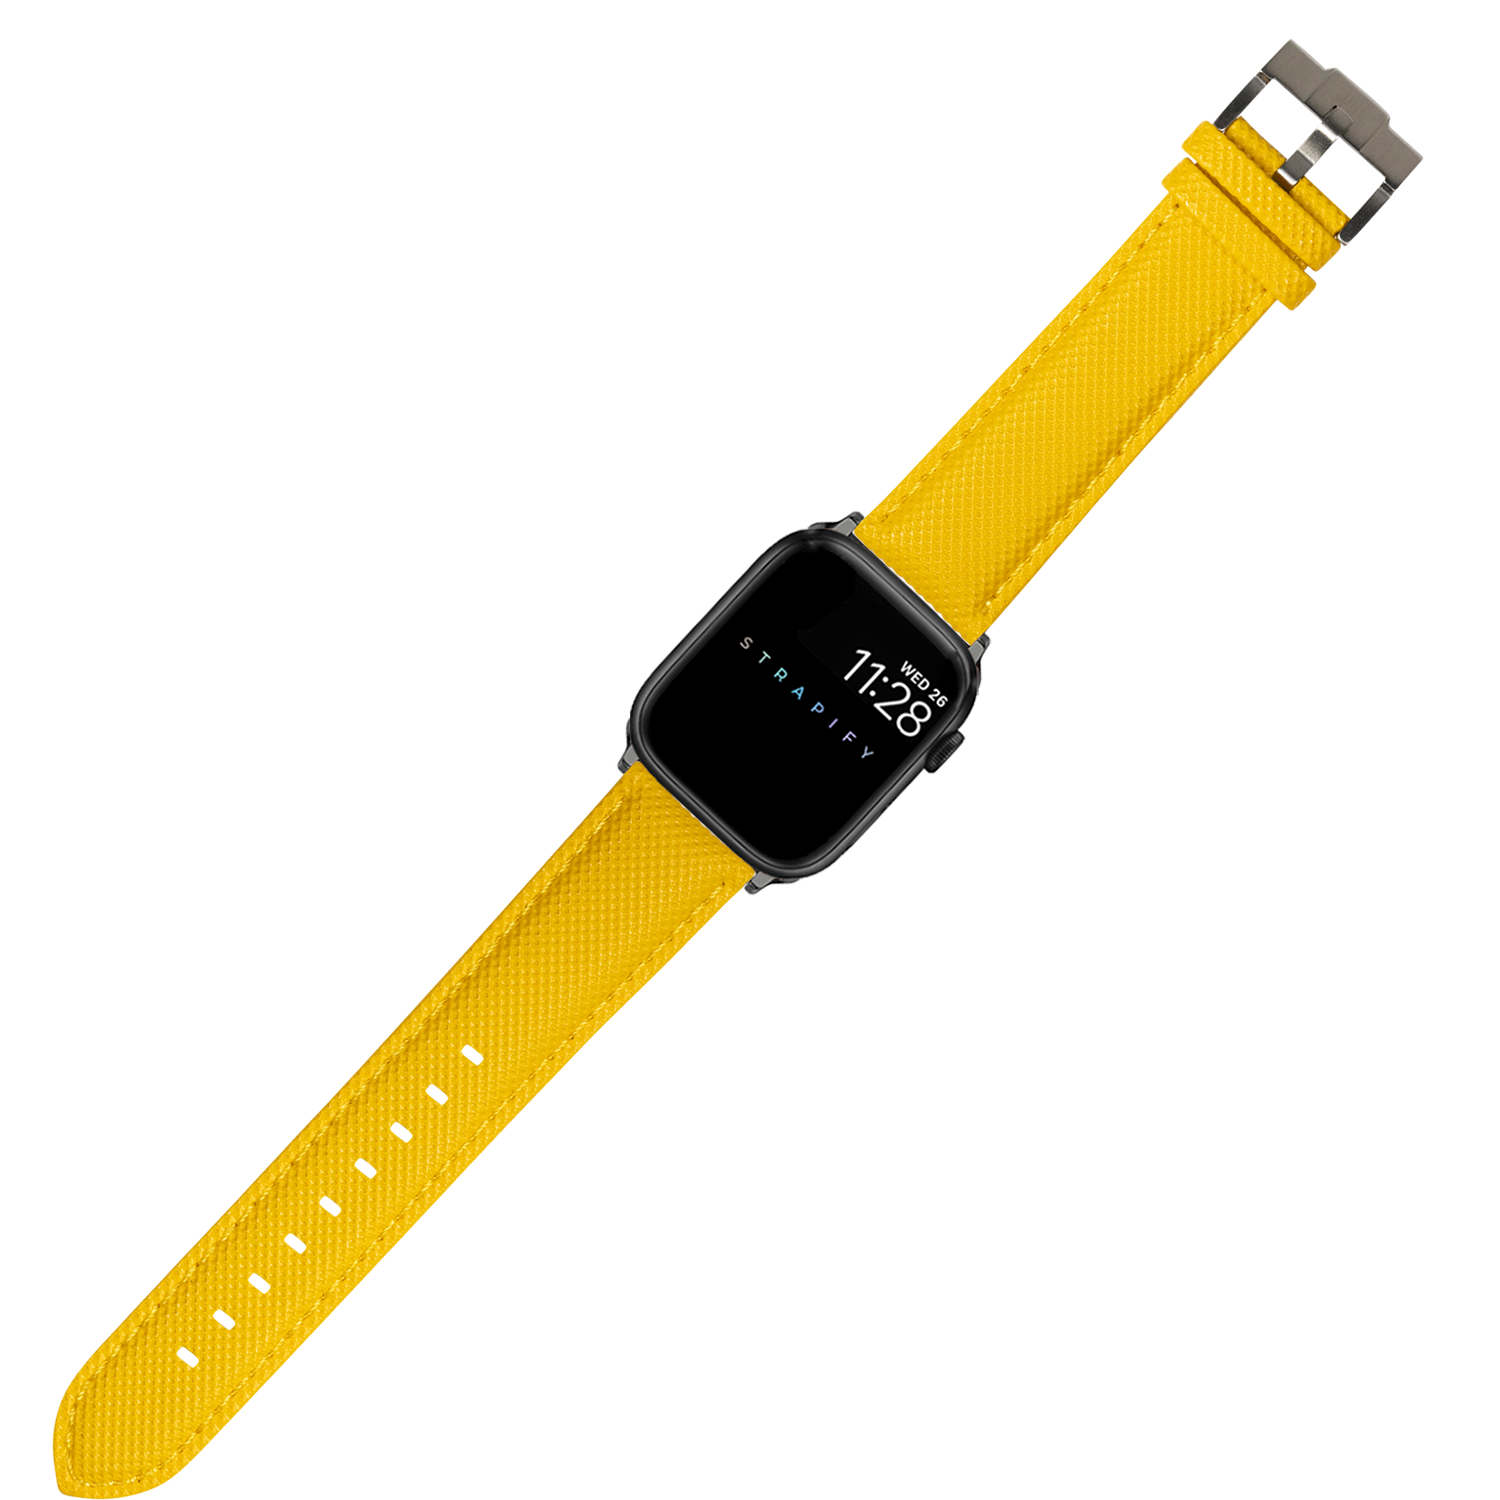 [Apple Watch] Sailcloth - Yellow